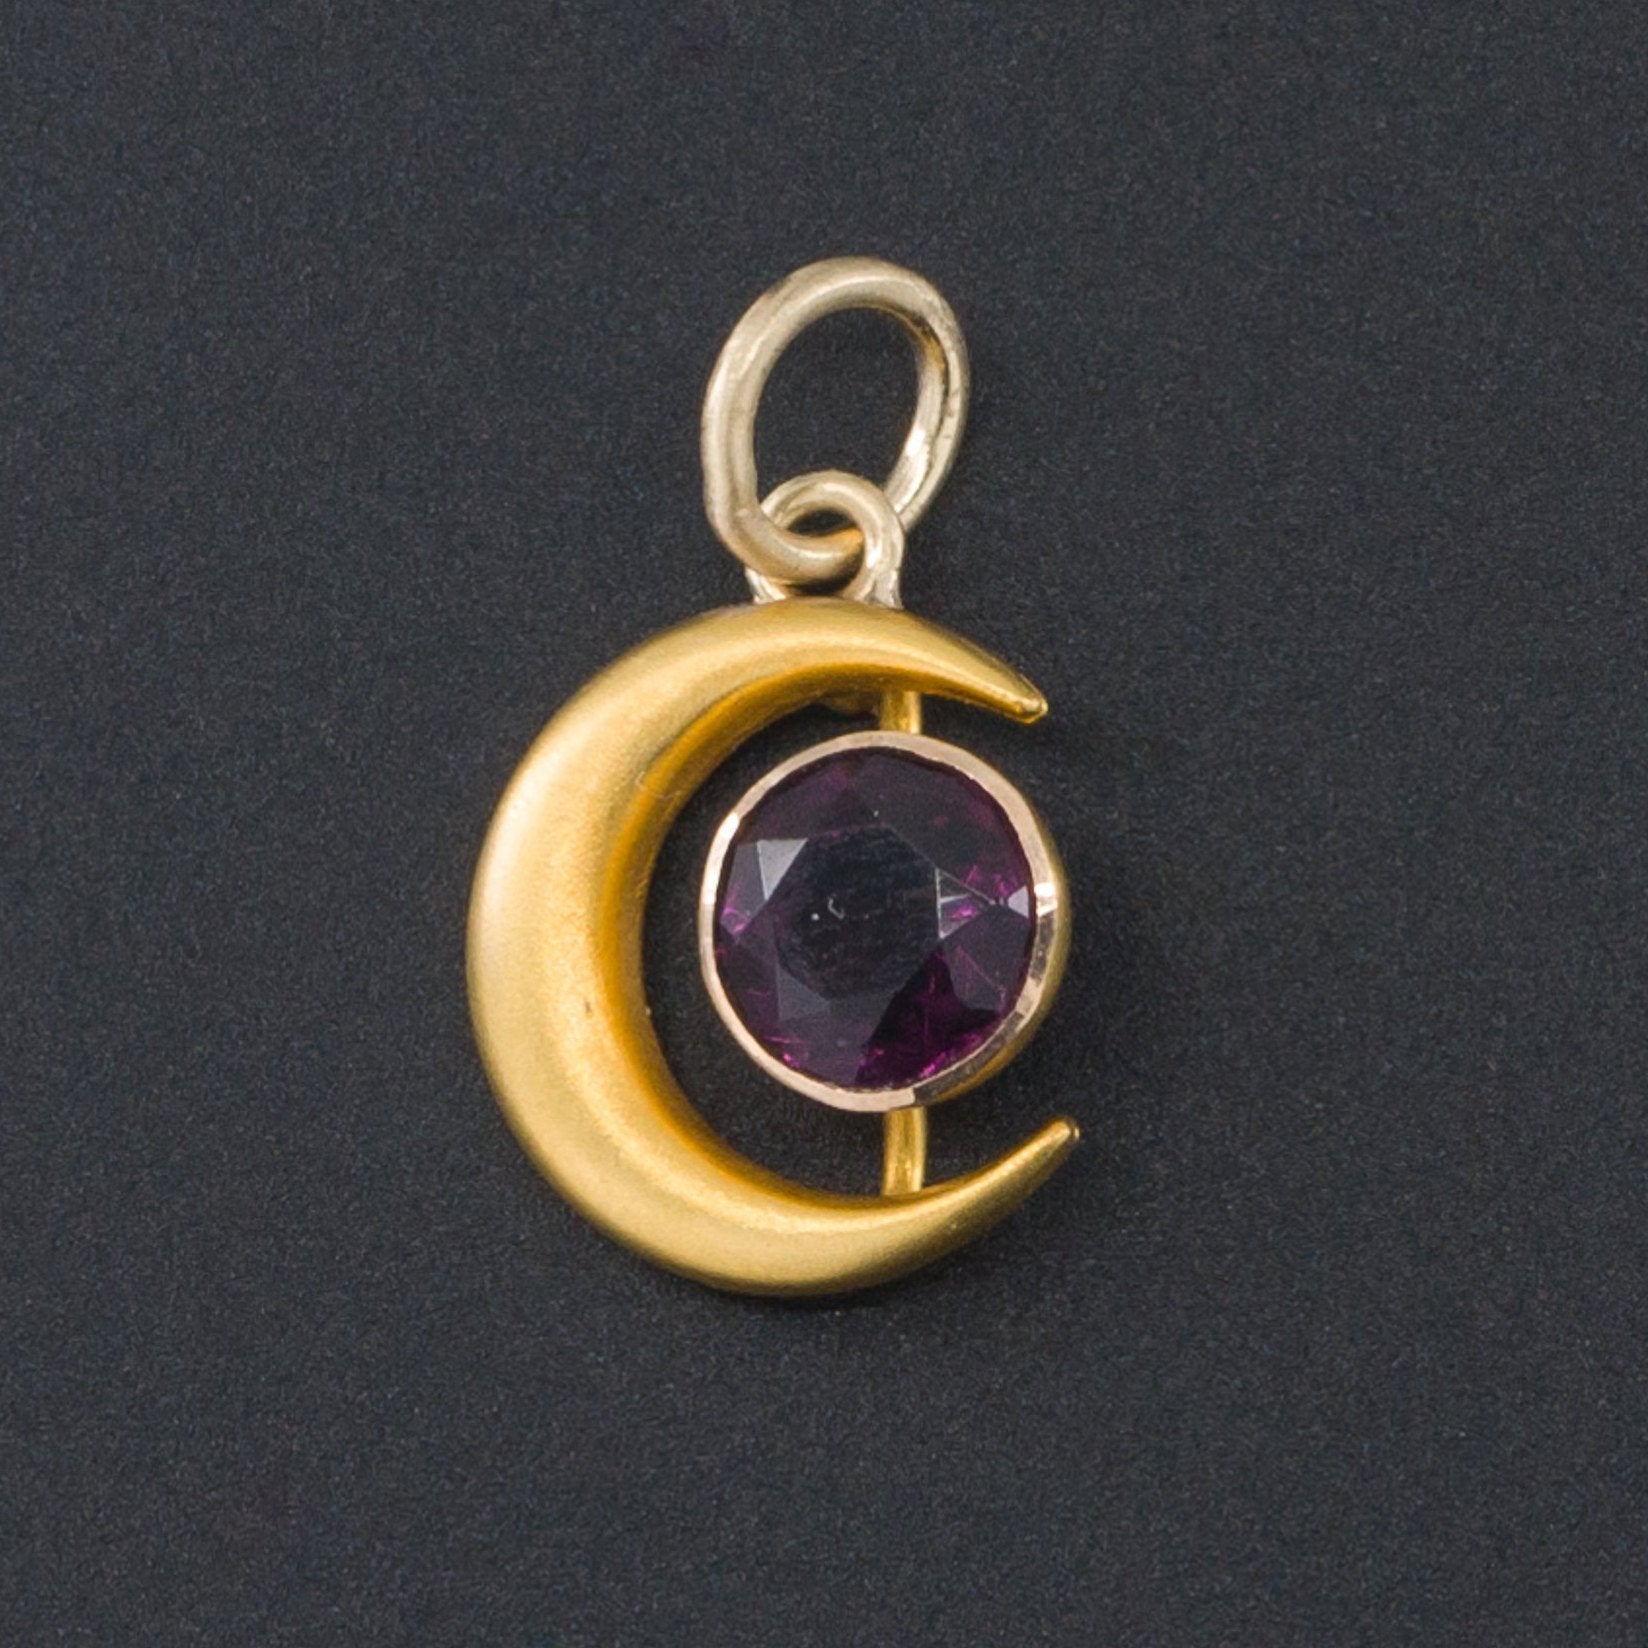 Crescent Moon Charm | Antique Crescent Charm| 10k Gold Charm | Pin Conversion |